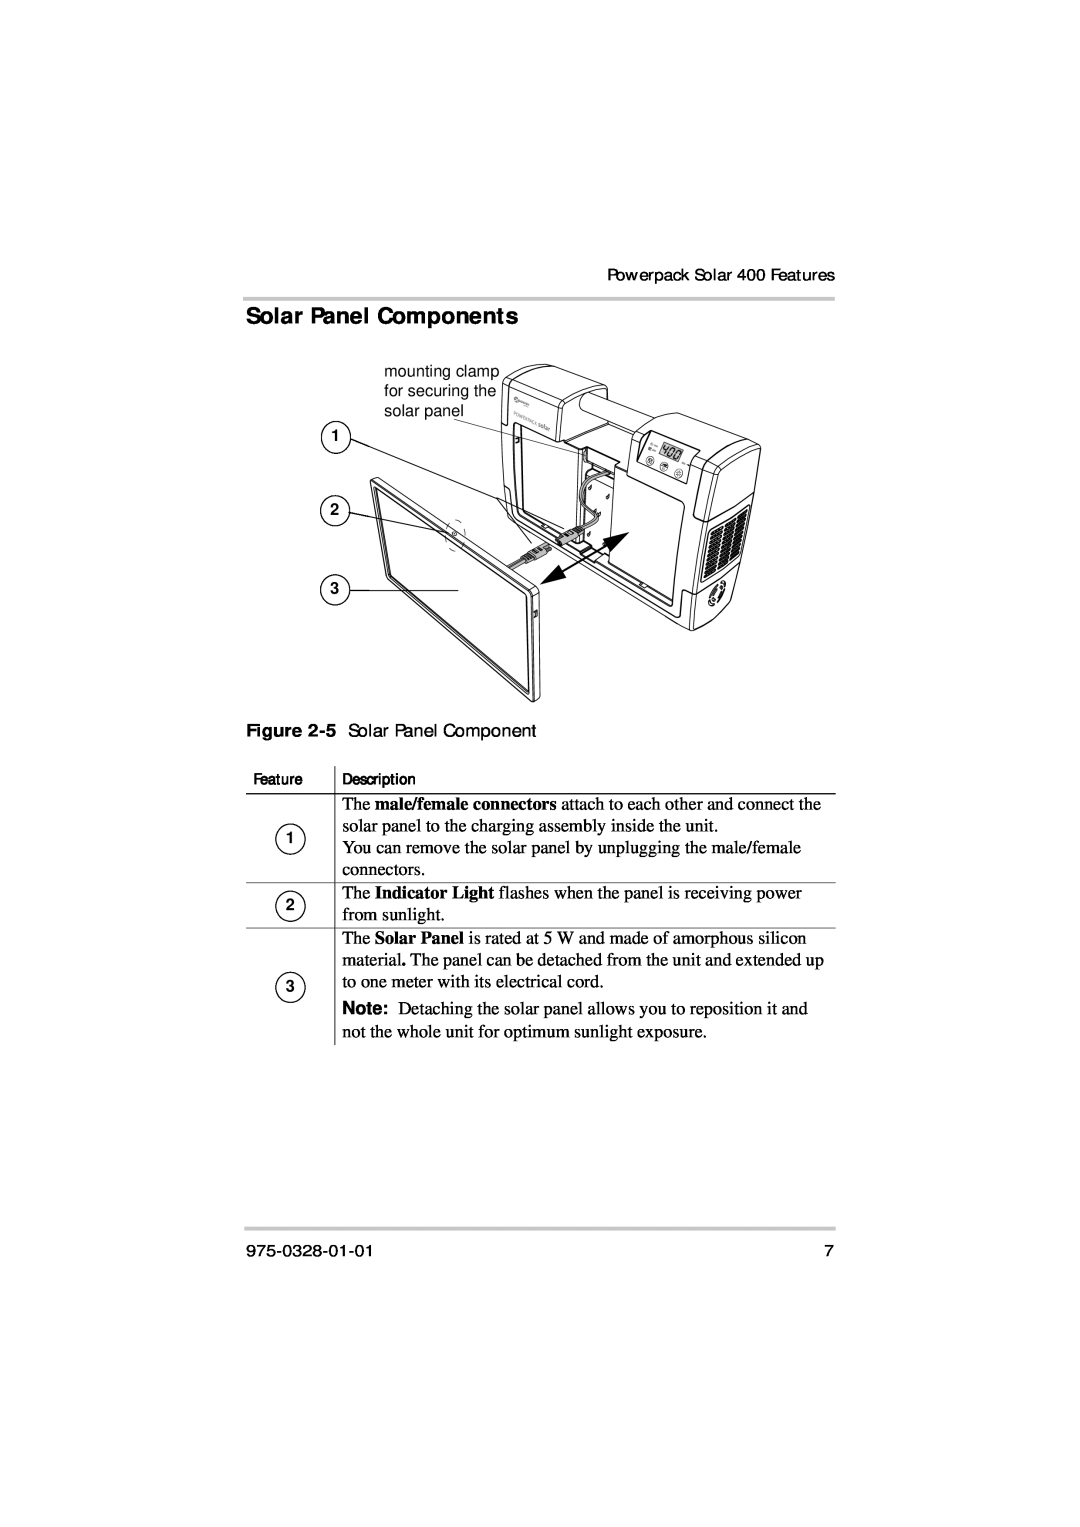 Xantrex Technology Solar 400 manual Solar Panel Components, Feature, Description 